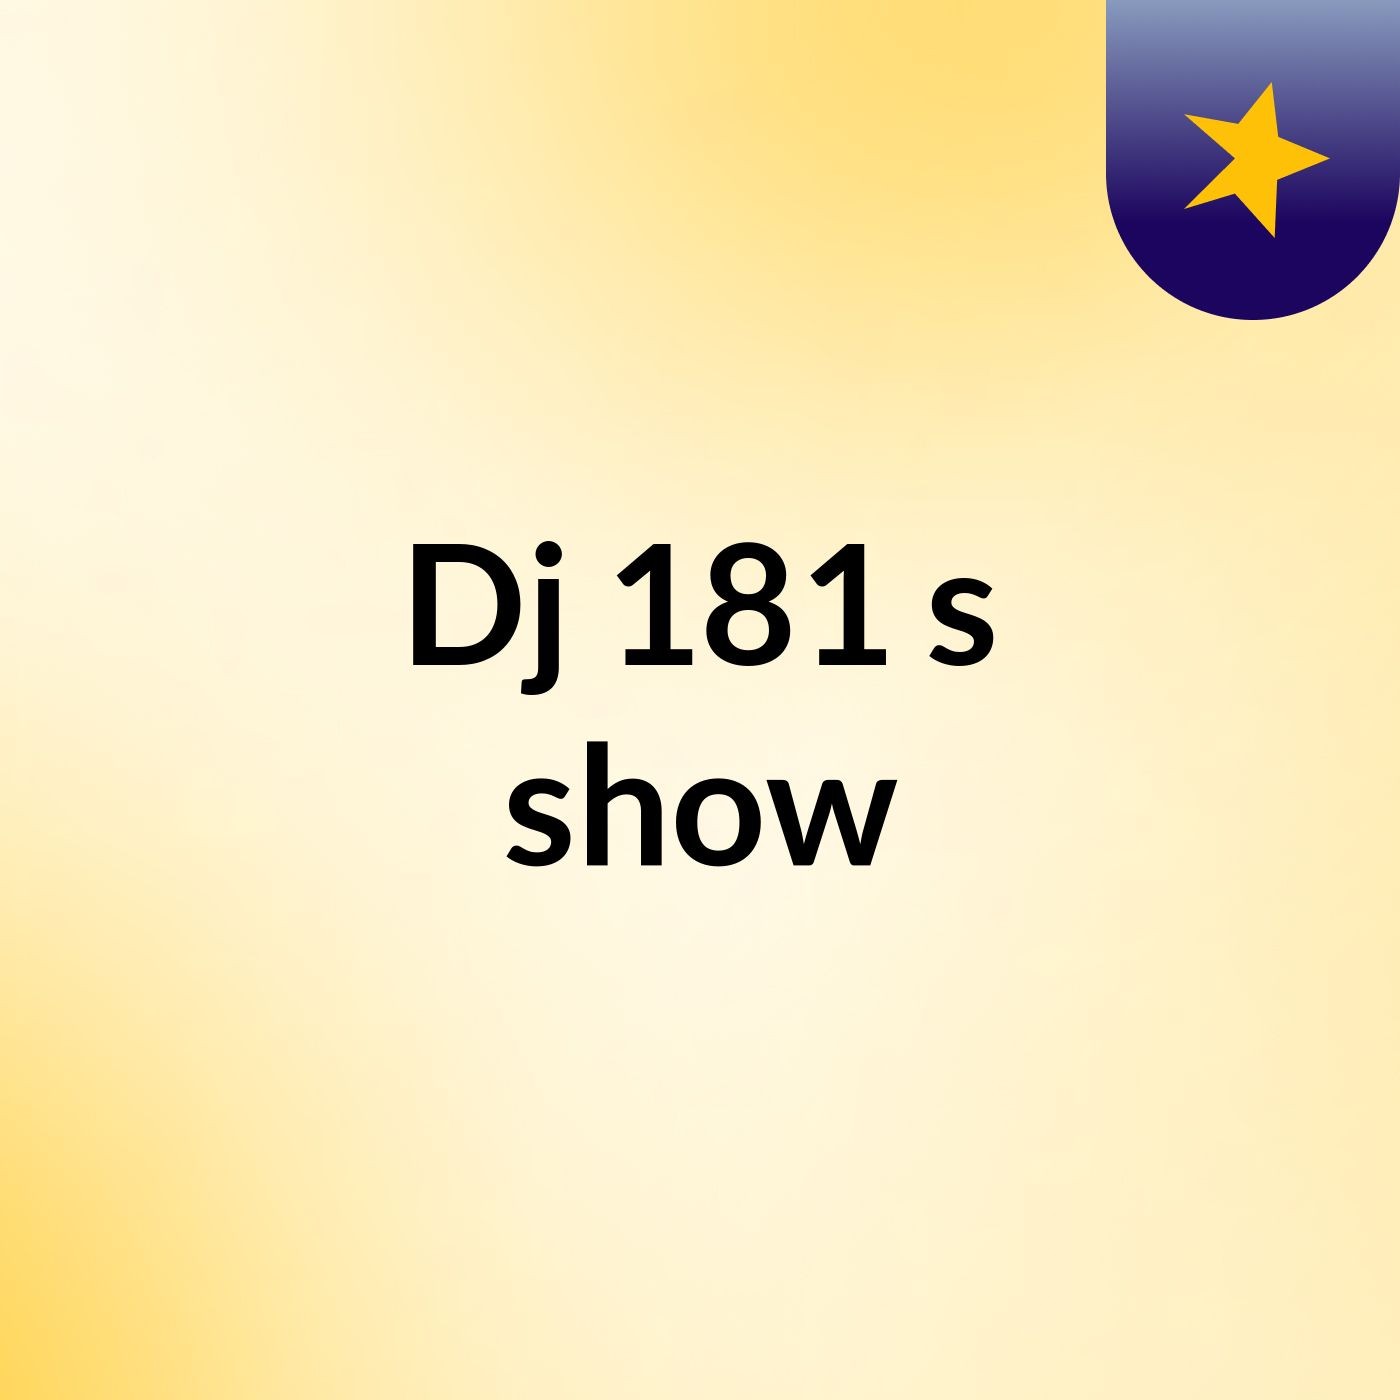 Dj 181's show